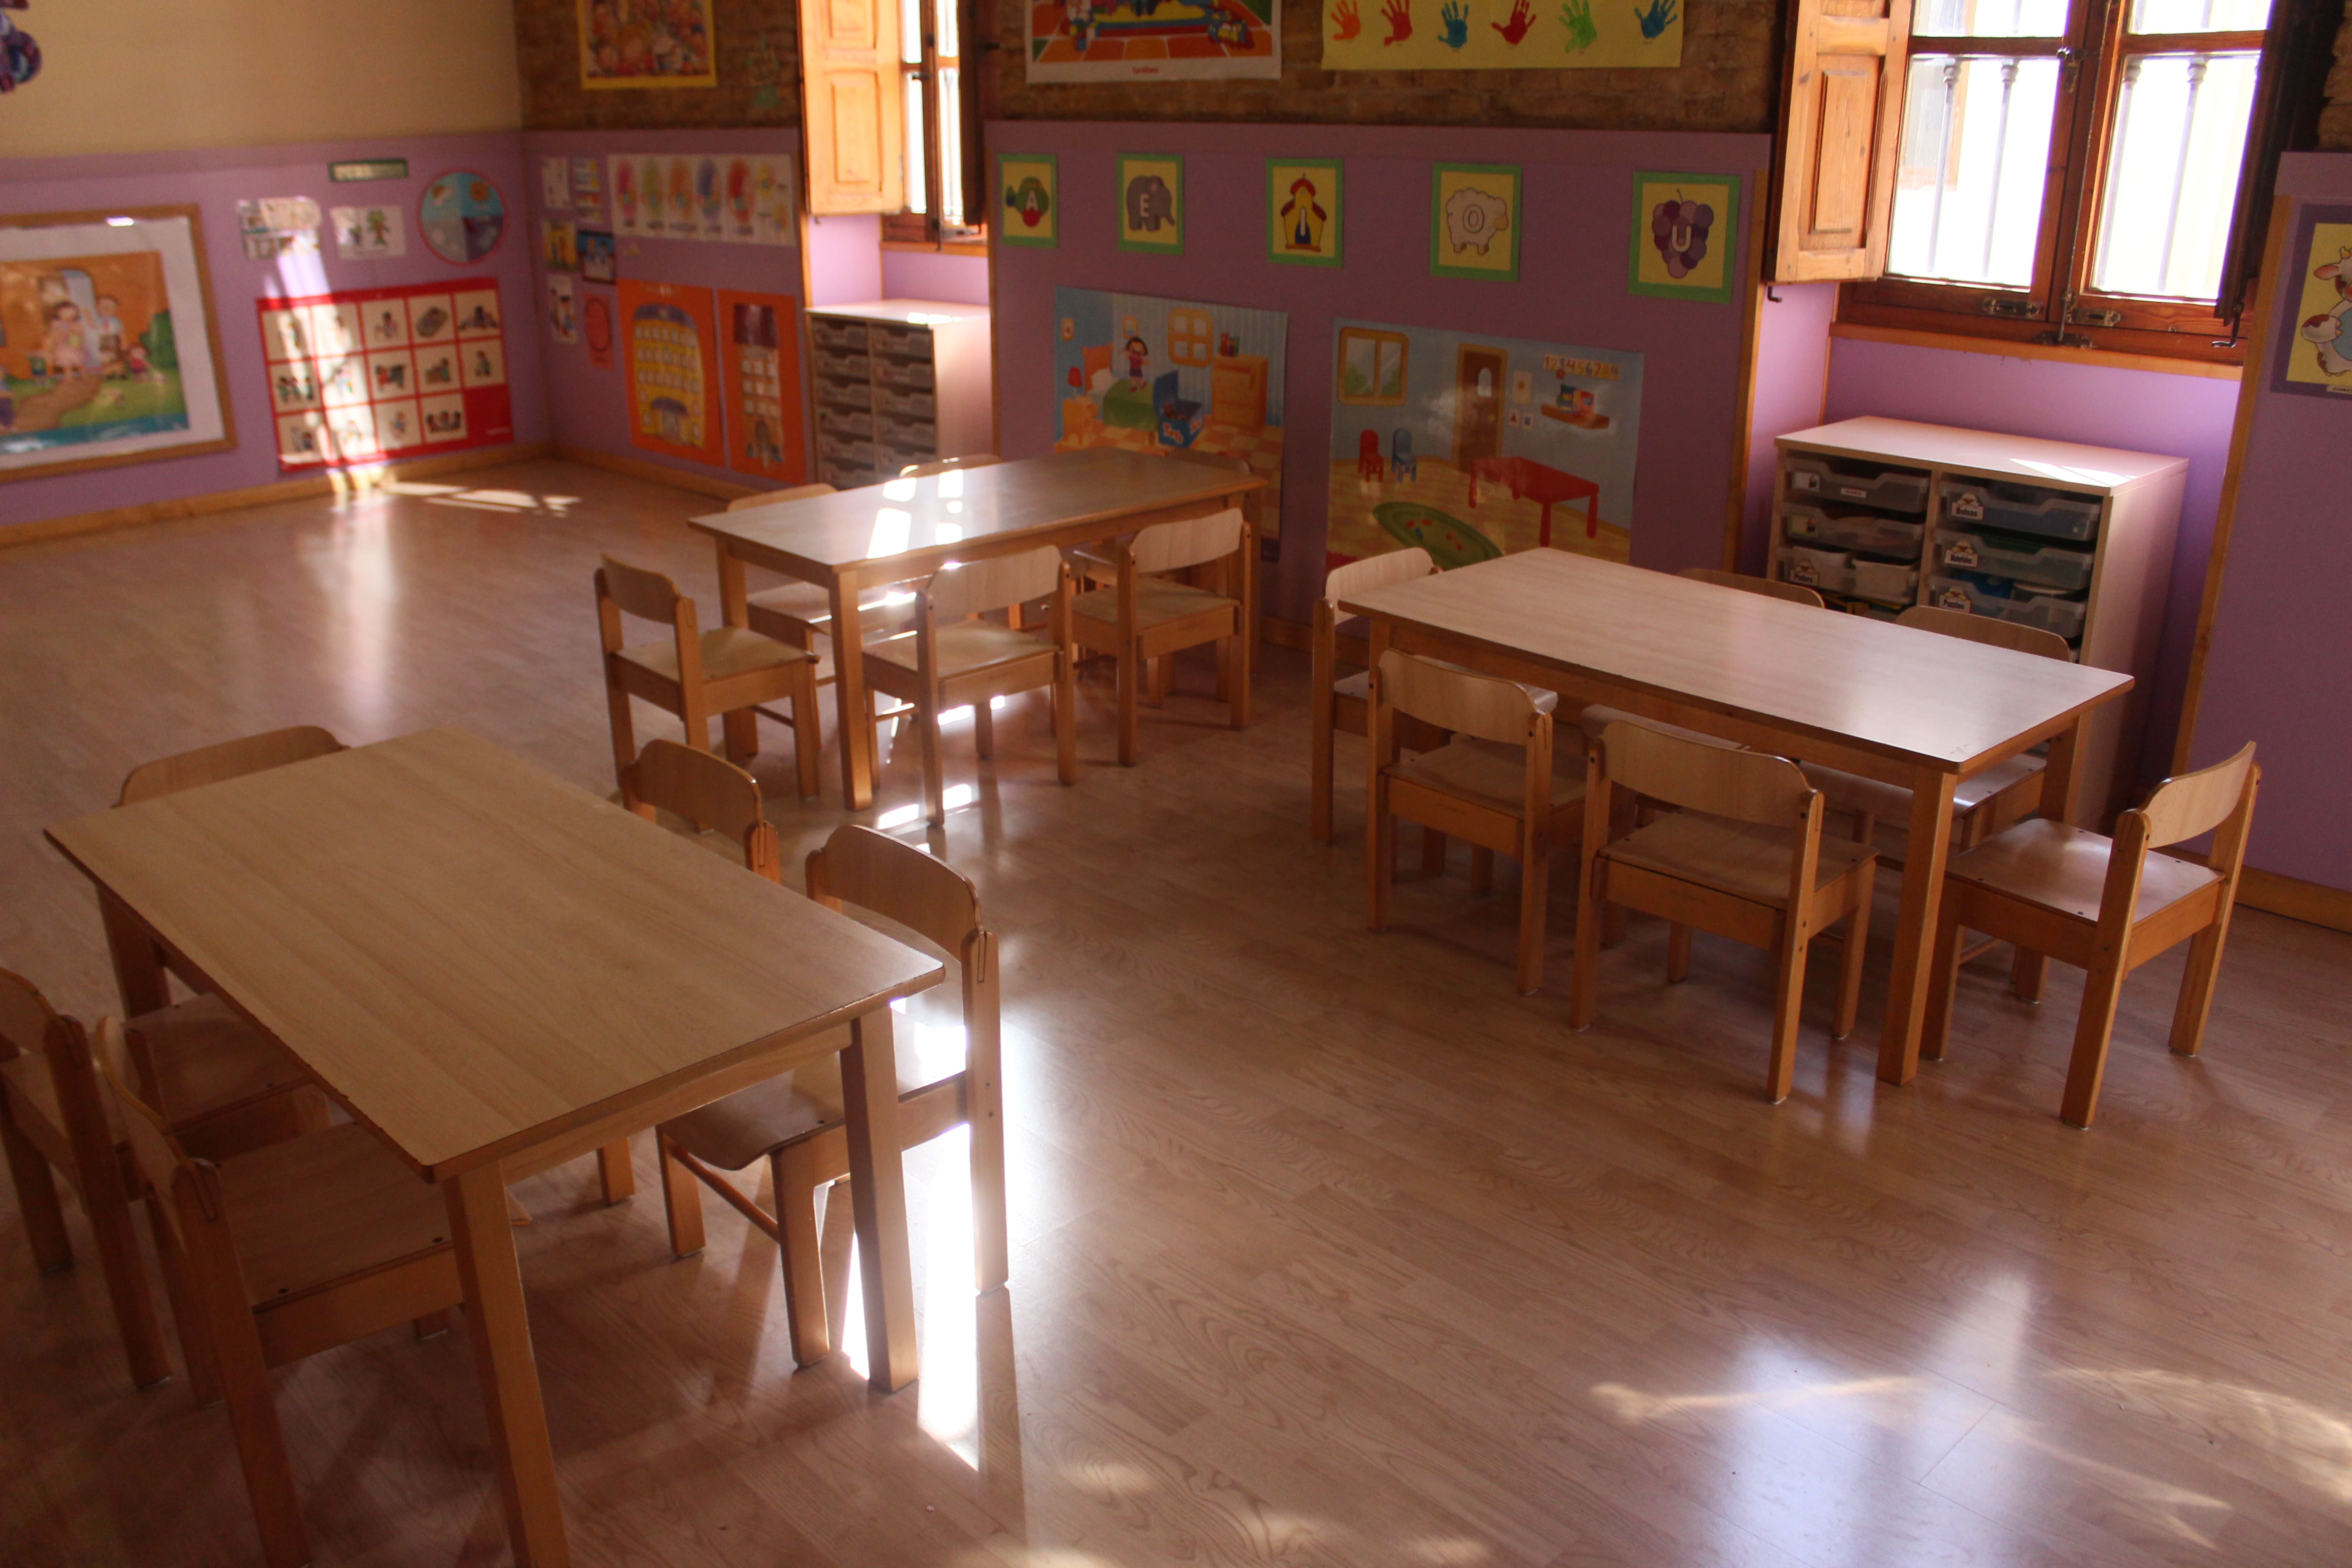 escuela infantil bilingüe en Valencia - clase iluminada